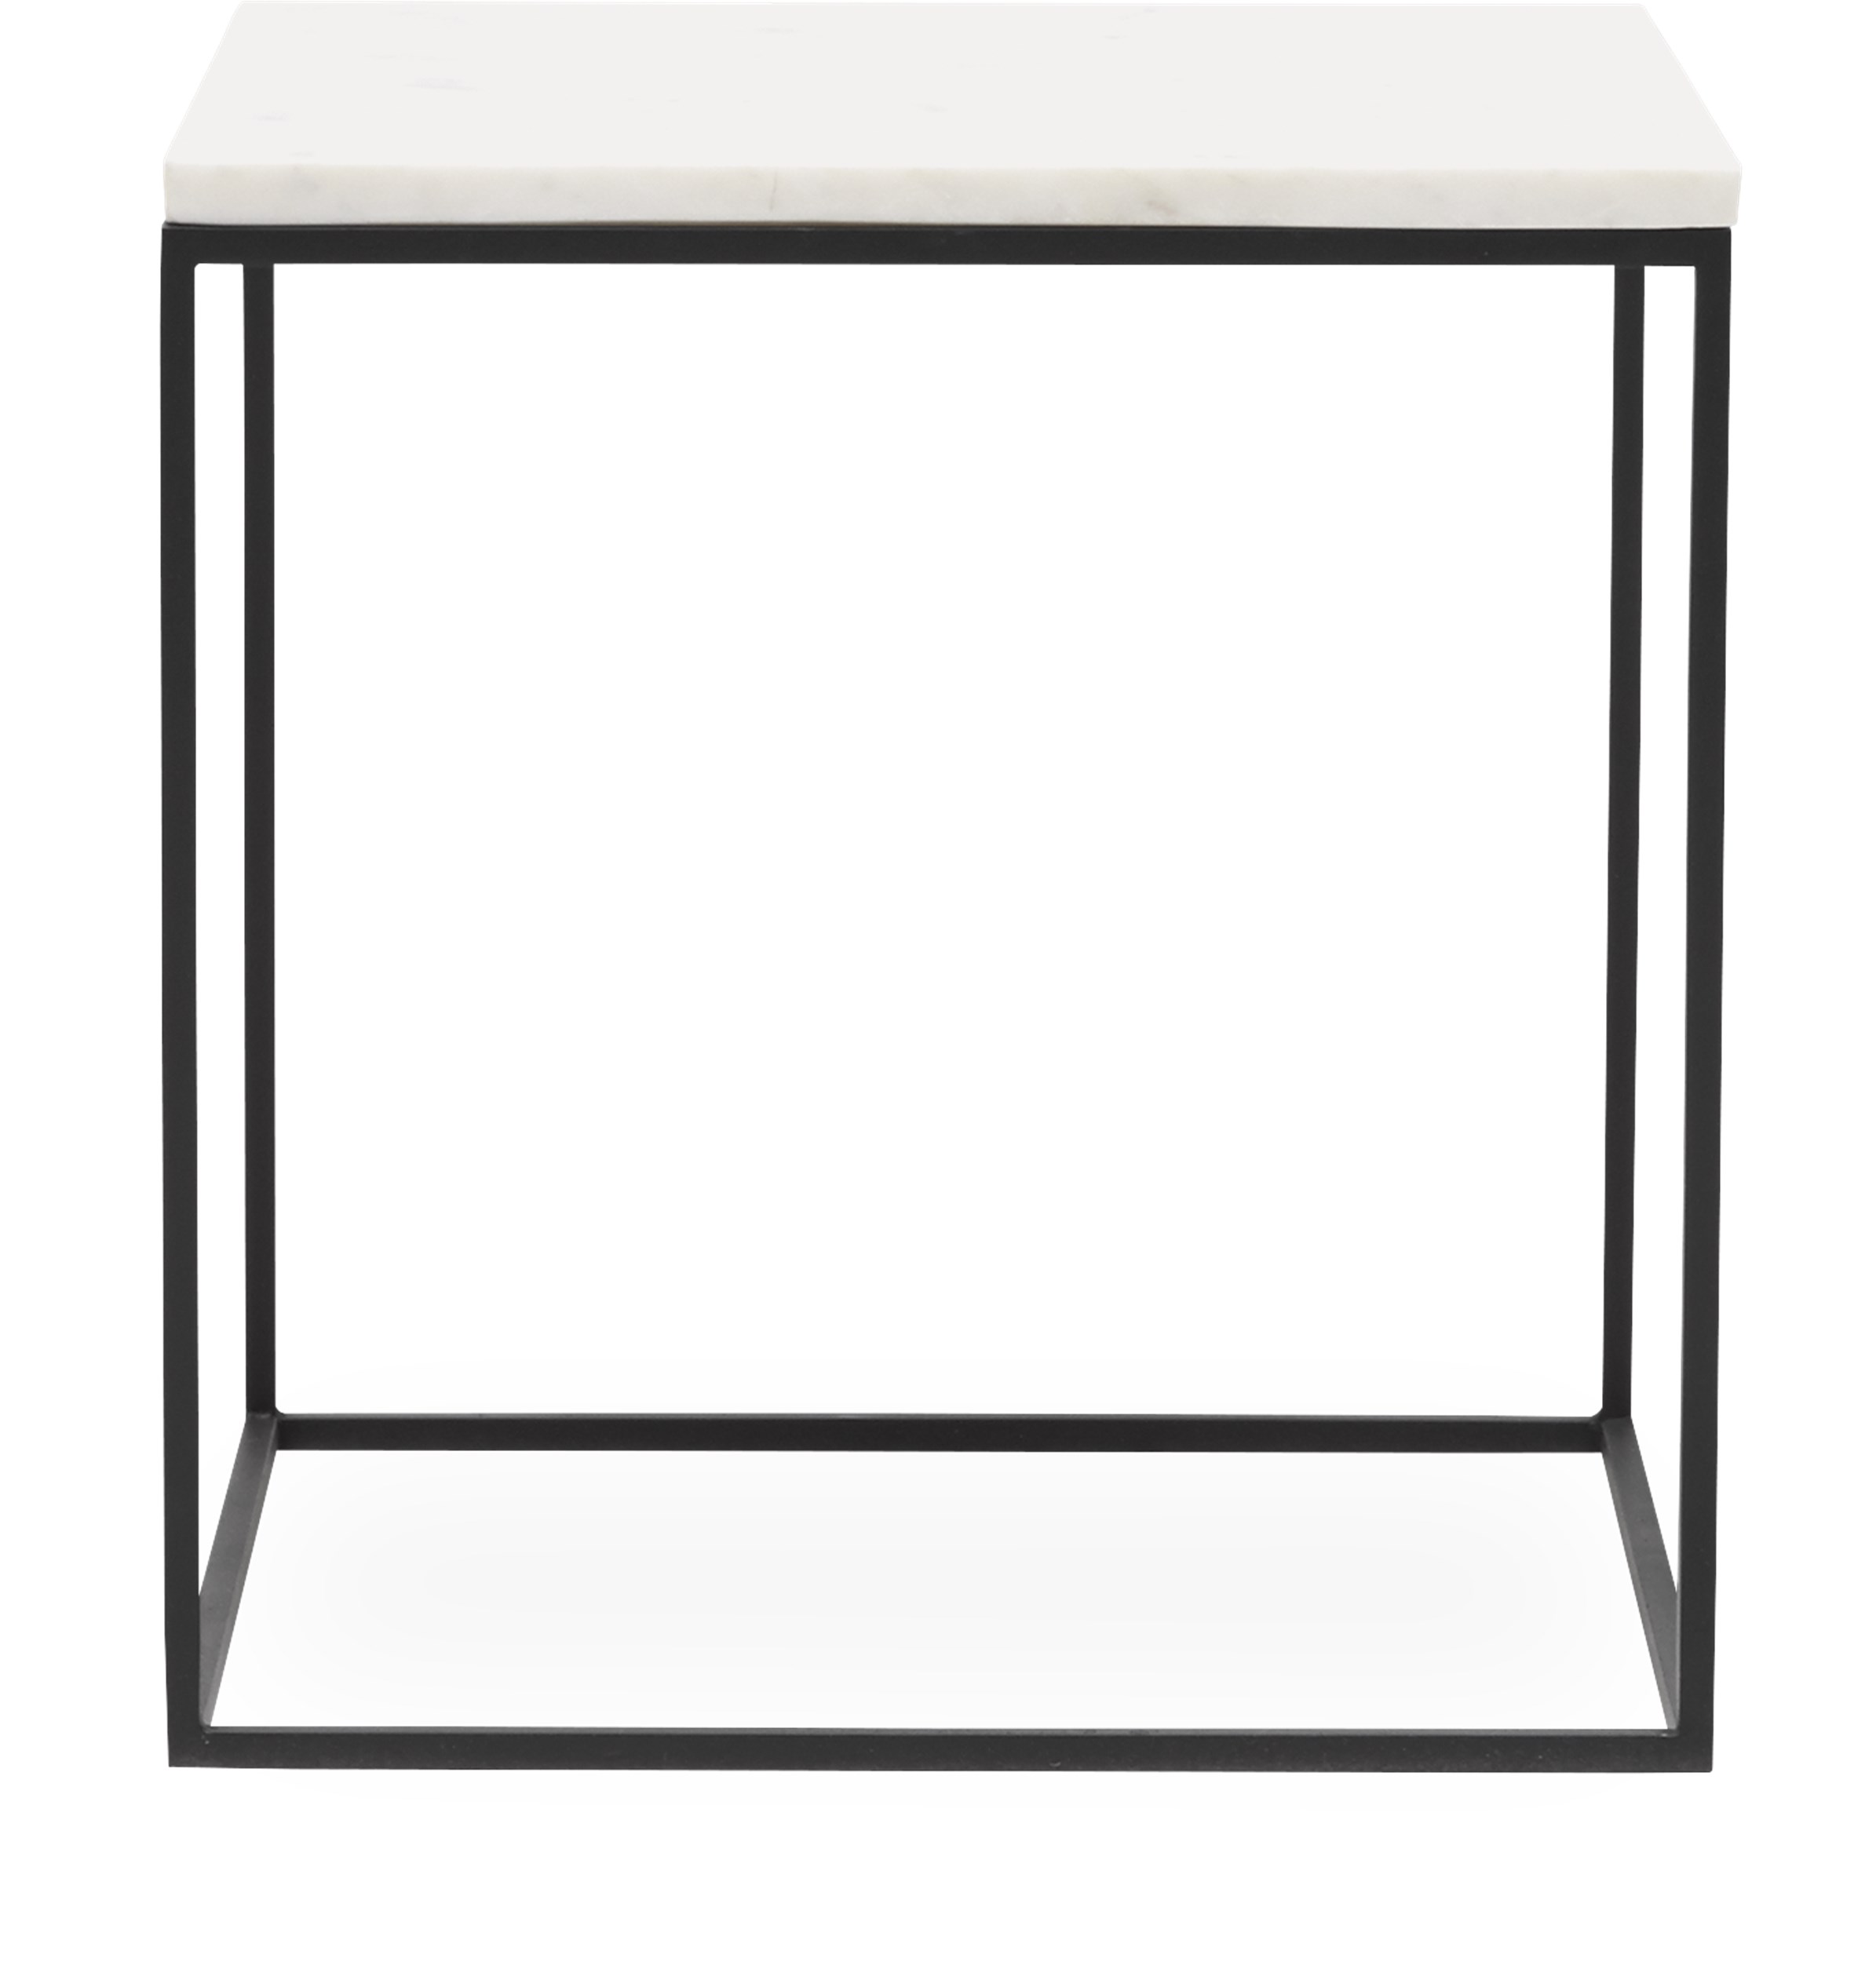 Square Soffbord 40 x 41,6 x 40 cm - Bordsskiva i vit marmor och stomme i svartlackerad metall